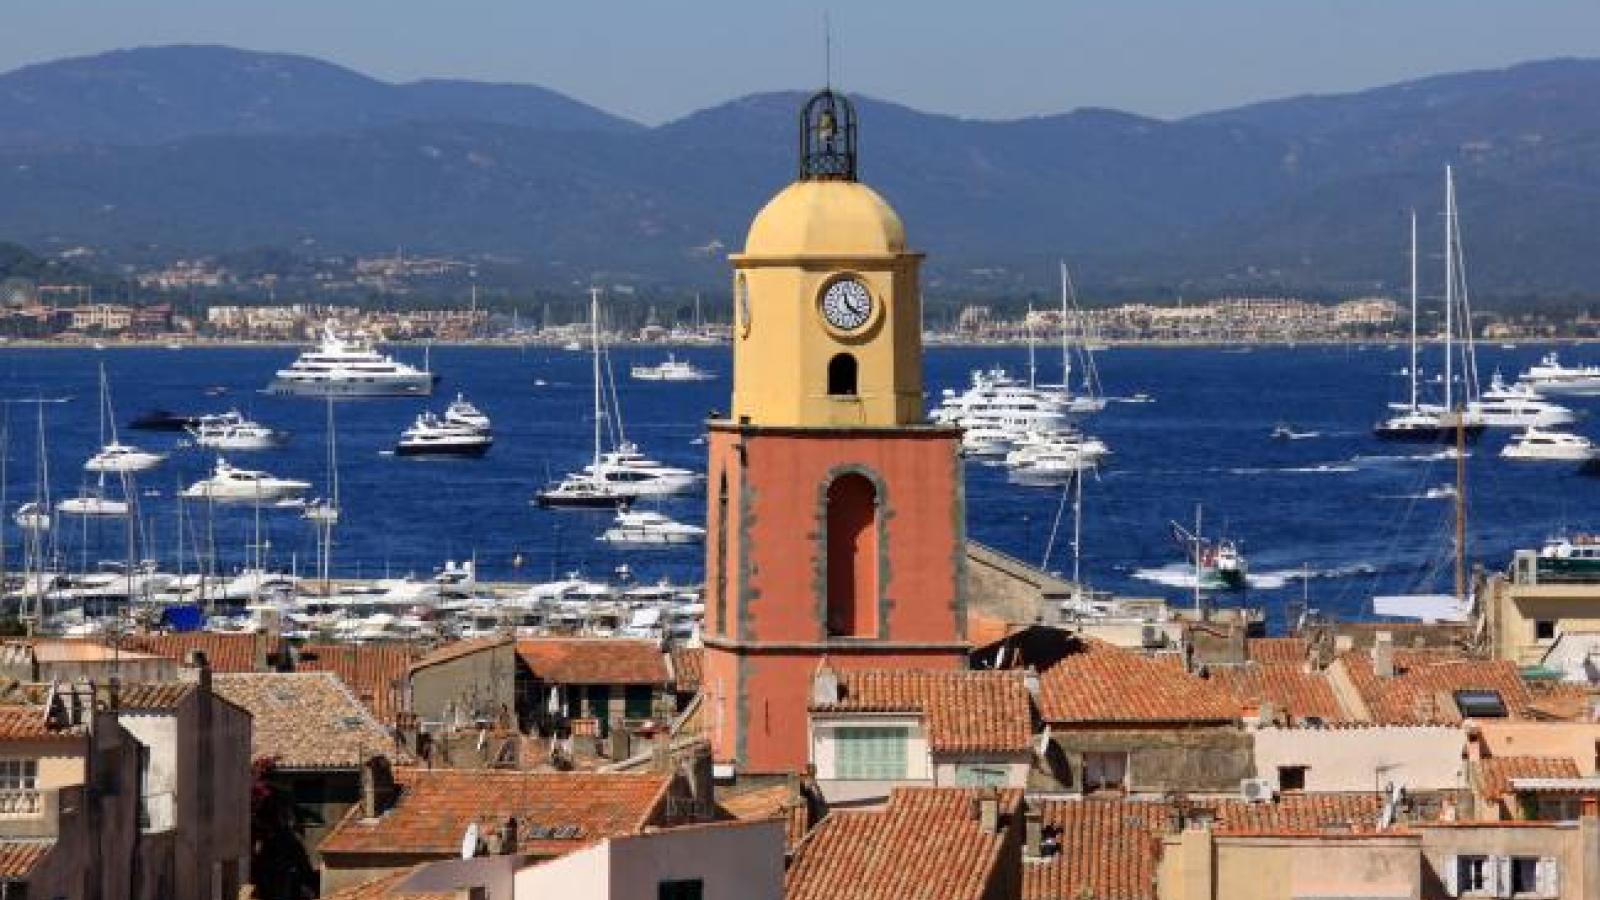 Design hotel Saint Tropez : Sezz welcomes a new summer season